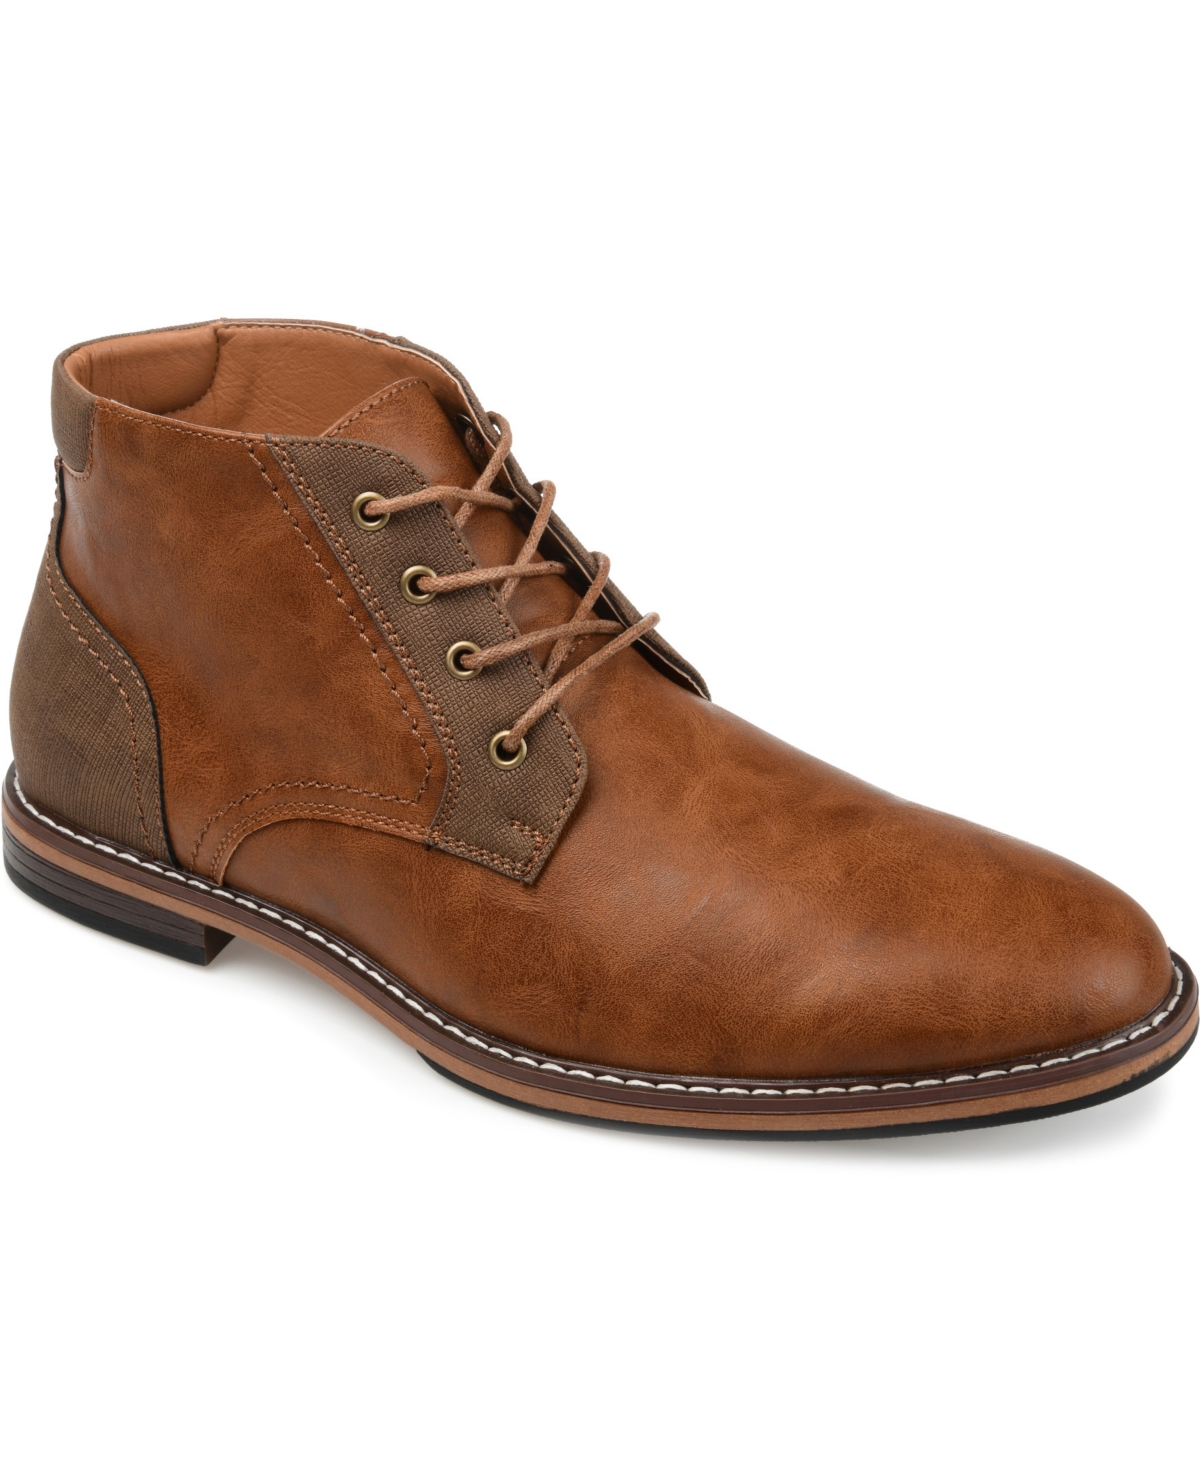 Men's Franco Plain Toe Chukka Boots - Brown